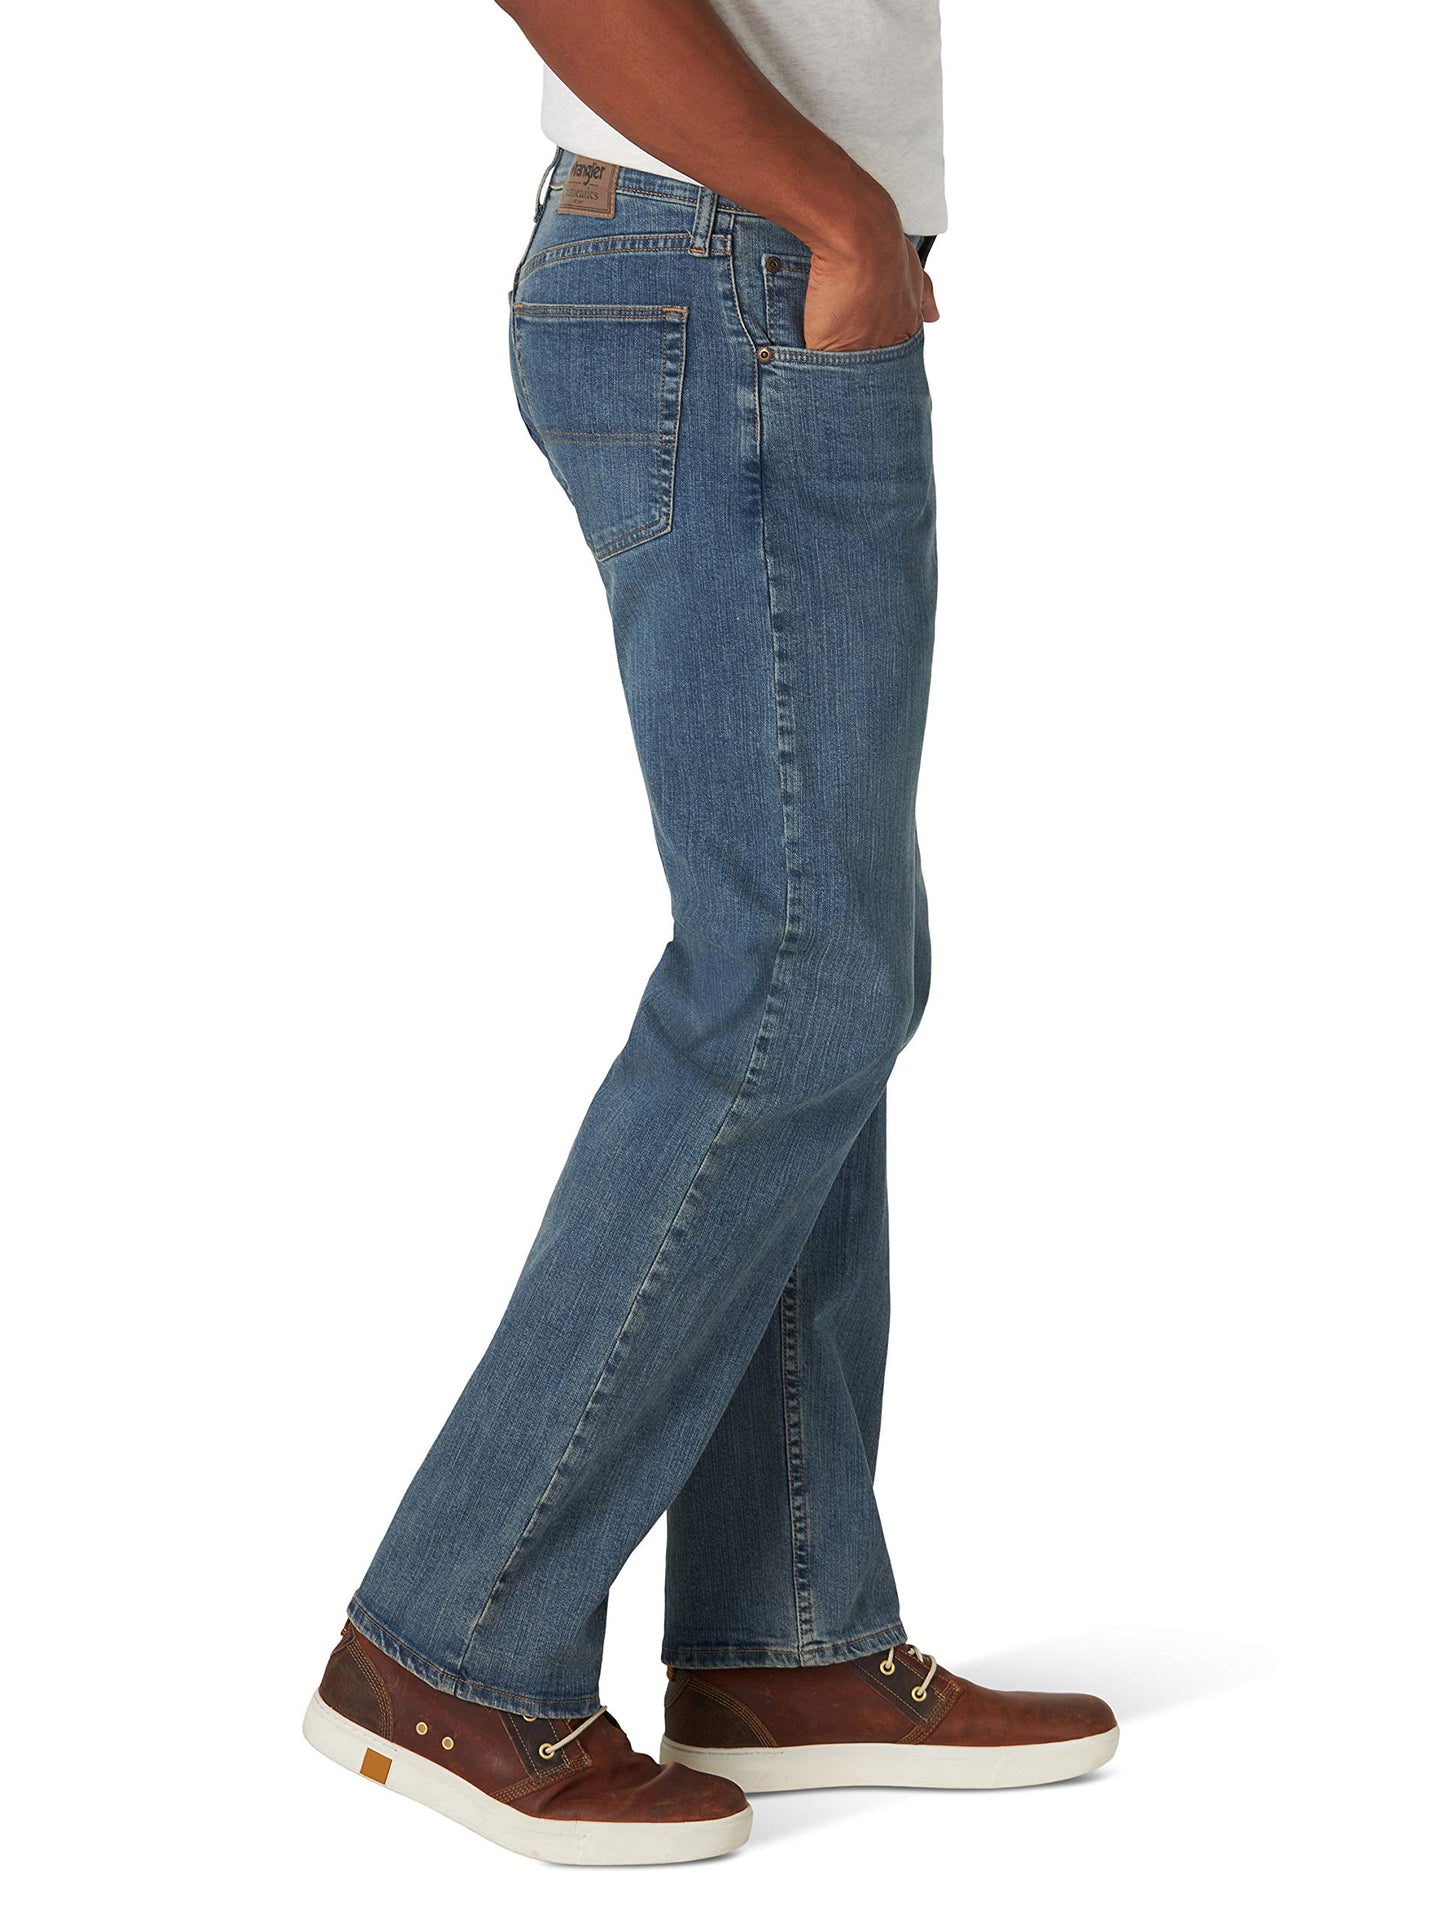 Wrangler Authentics Men's Regular Fit Comfort Flex Waist Jean, Slate, 42W x 32L